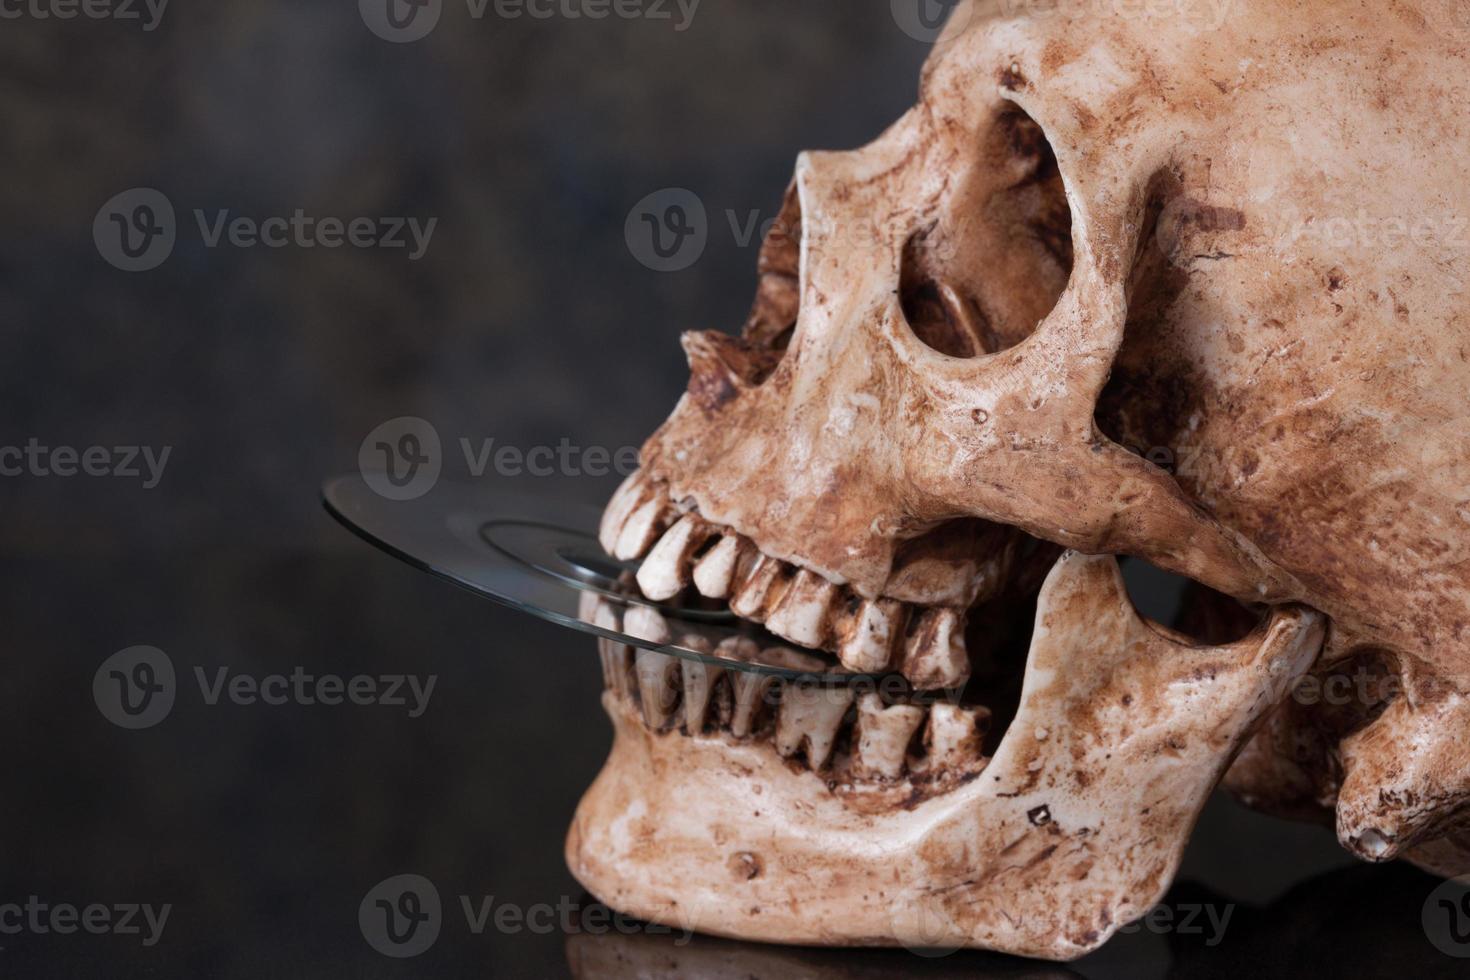 menselijke schedel en dvd in de mond foto